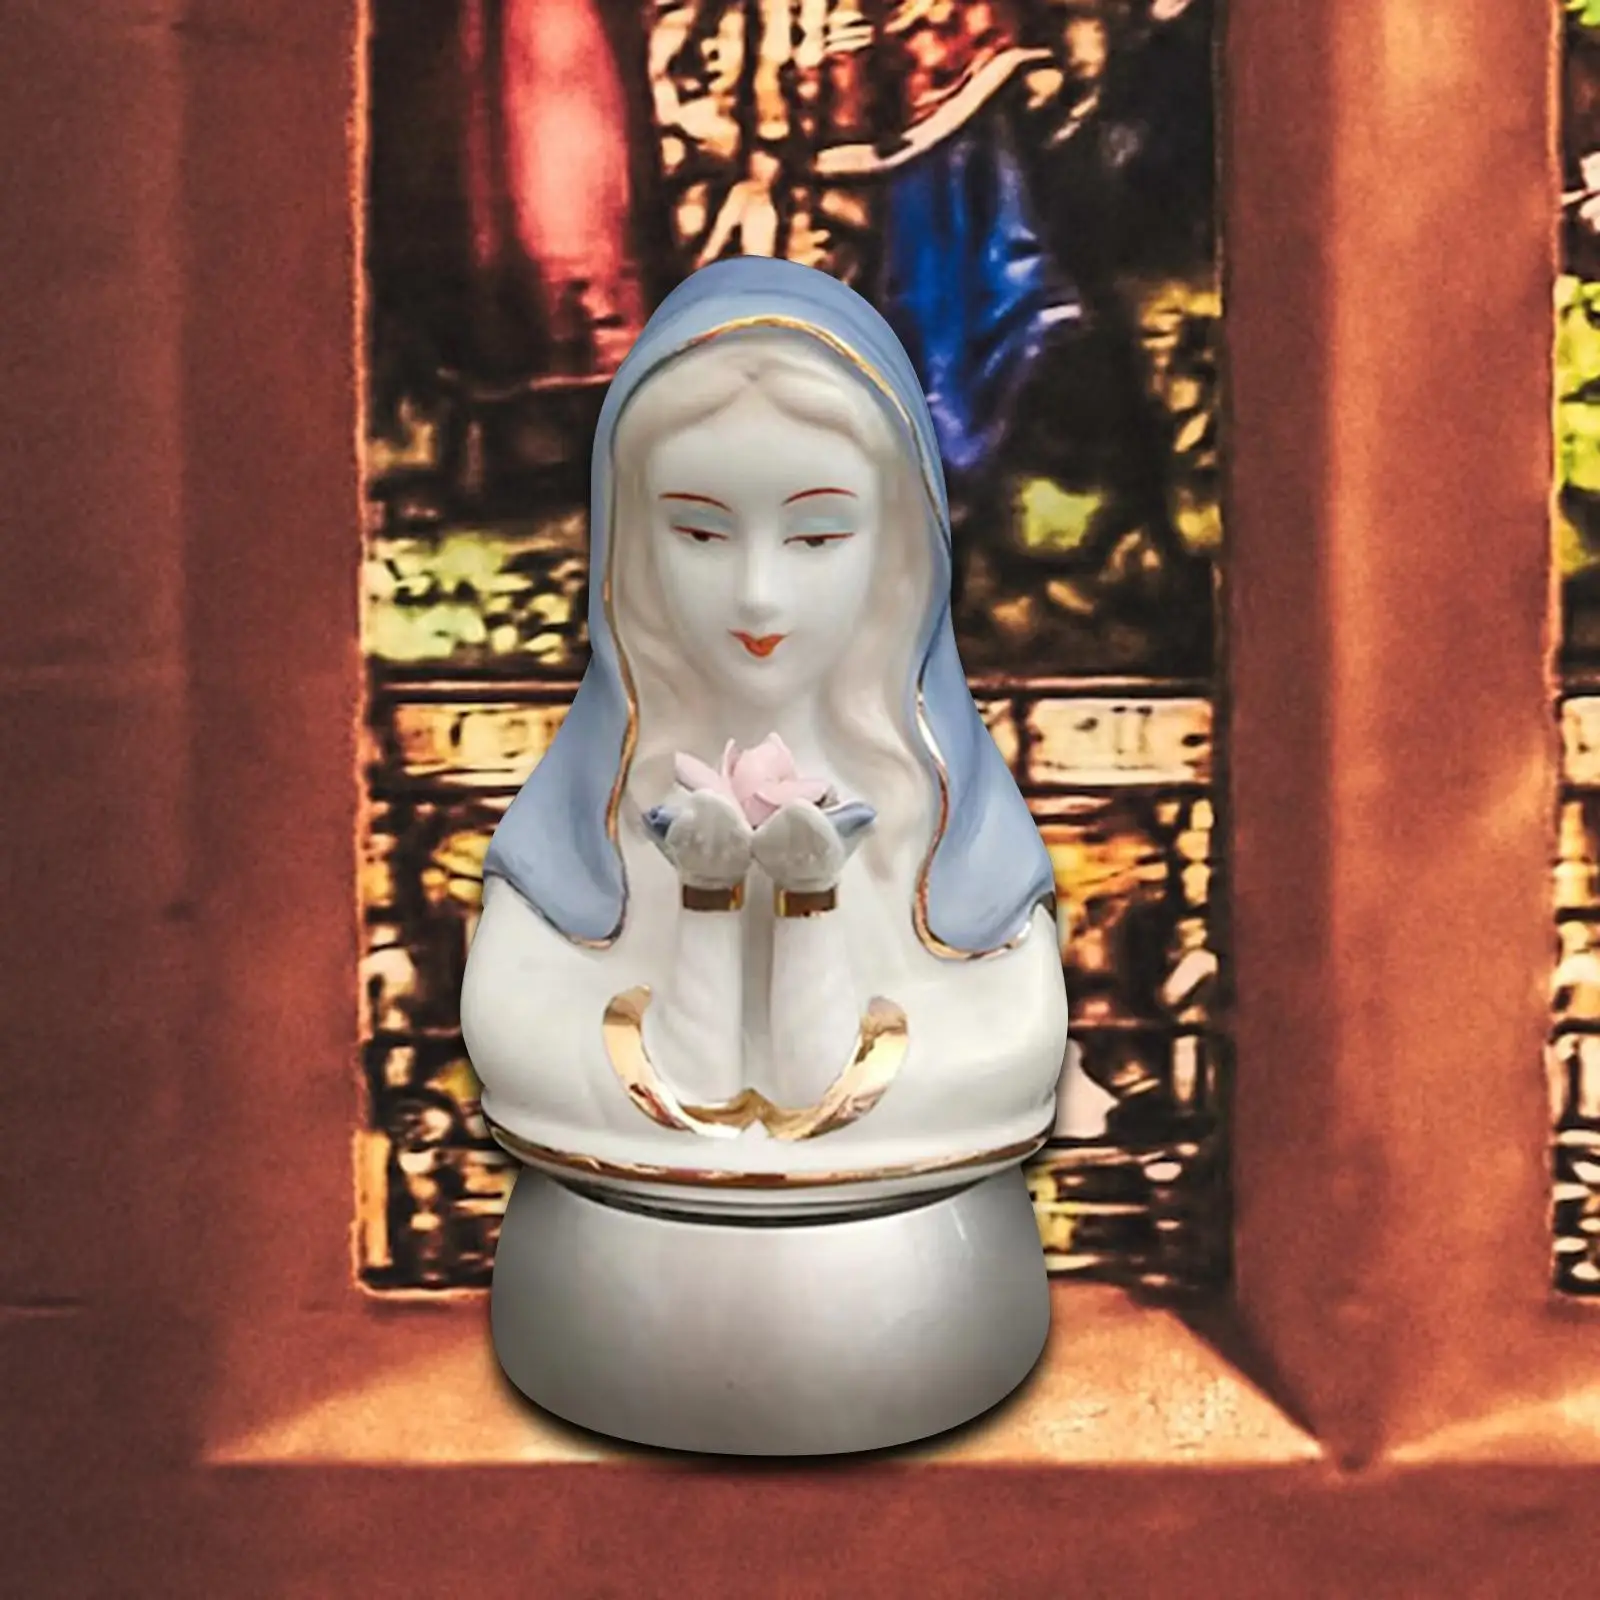 LED Virgin Mary Sculpture Figurine Light Decorative Religious Lantern Desktop